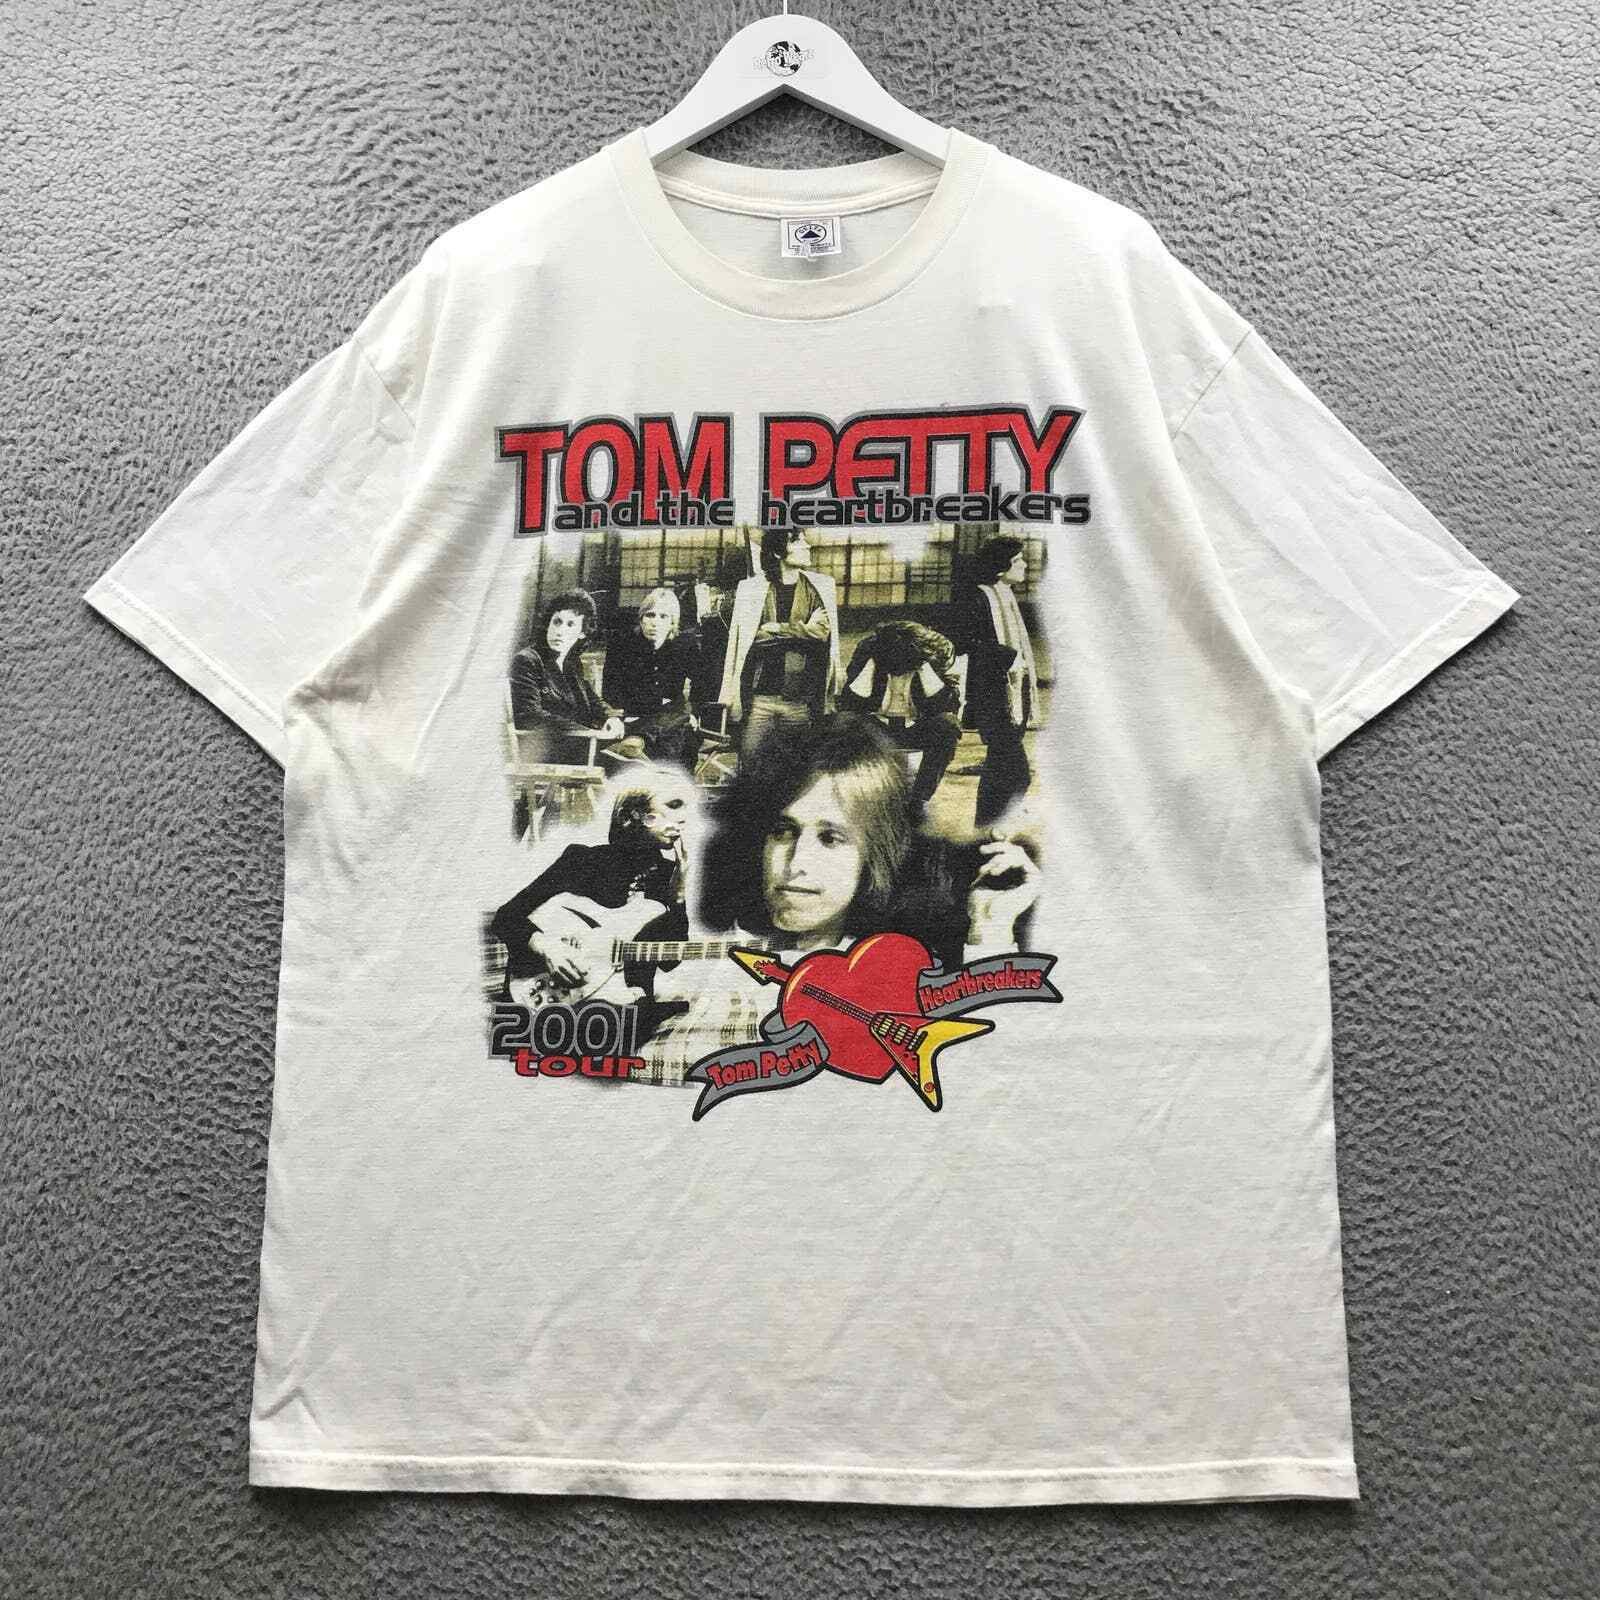 Vintage 2001 Tom Petty Heartbreakers Tour T-Shirt Men's Short Sleeve White